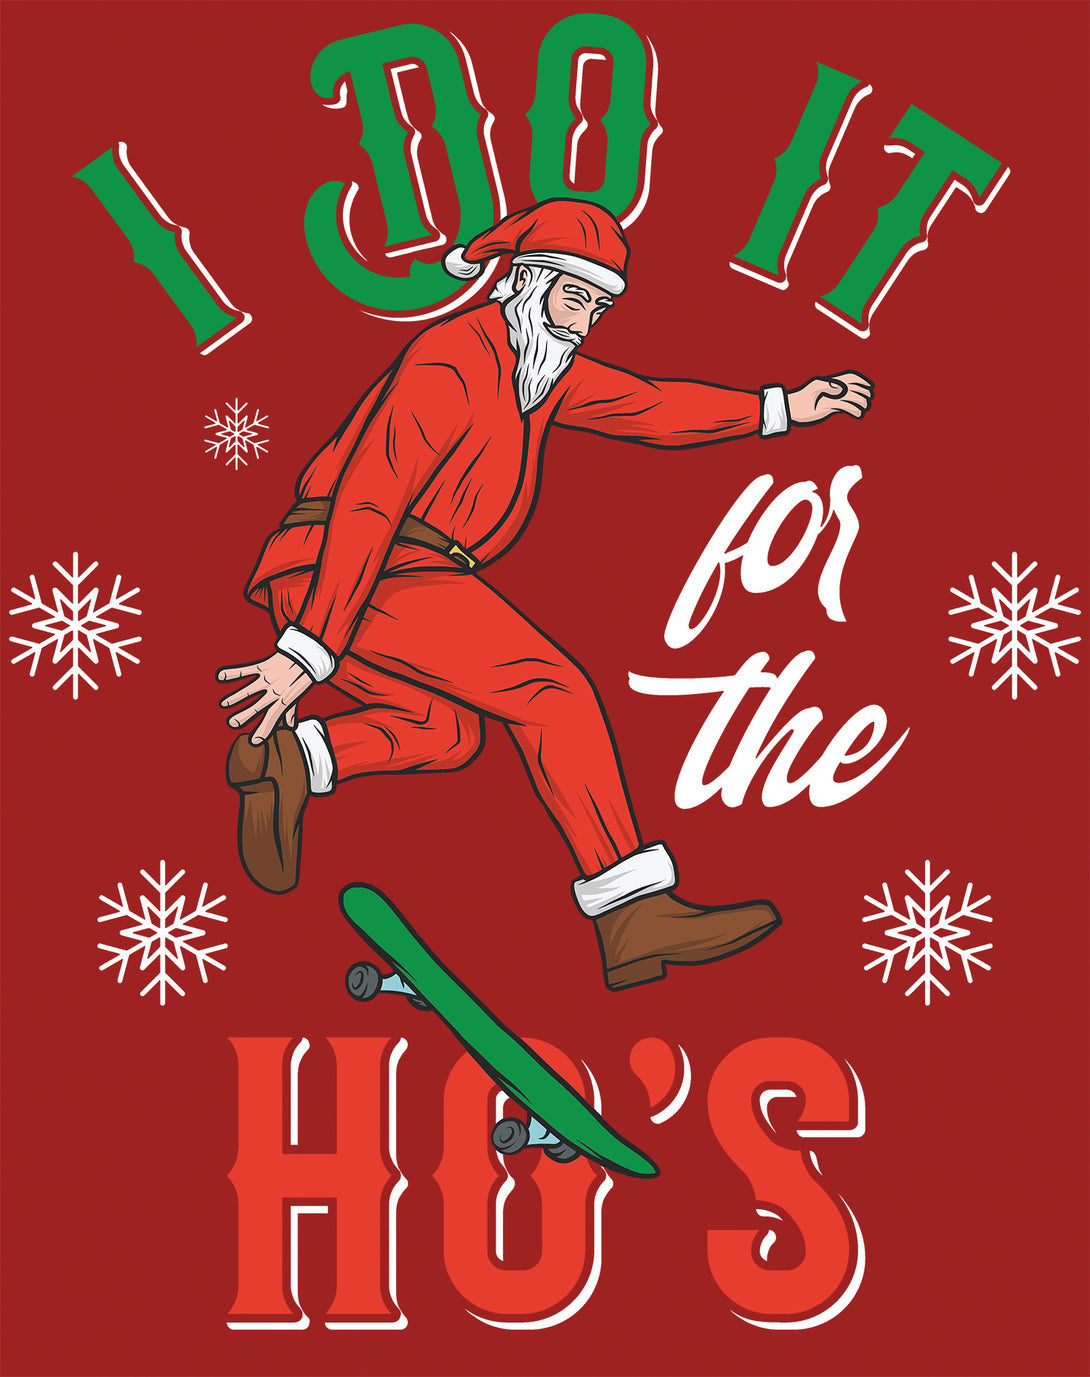 Christmas Santa I Do It For The Ho's Meme Funny Dad Joke Lol Men's T-Shirt Red - Urban Species Design Close Up